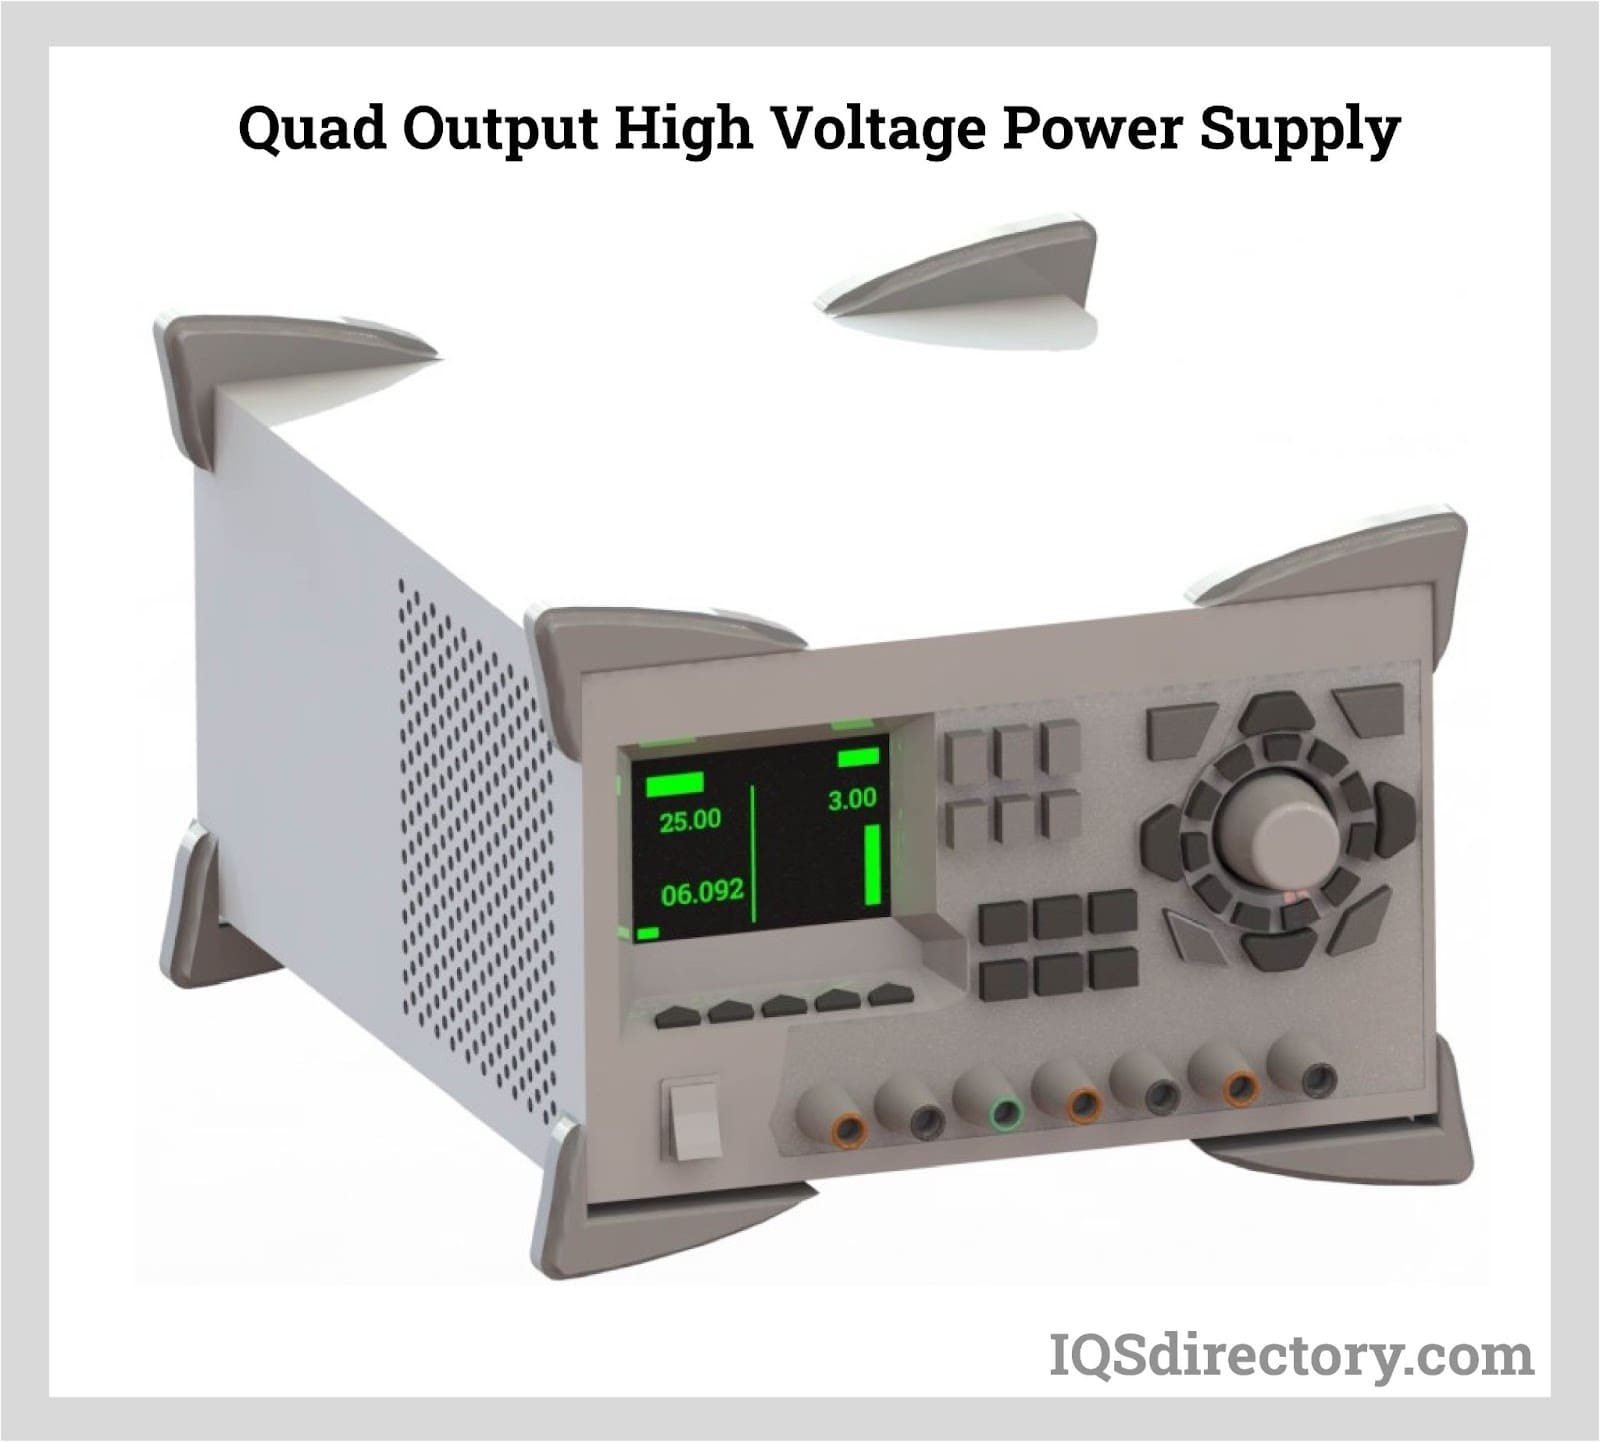 Quad Output High Voltage Power Supply